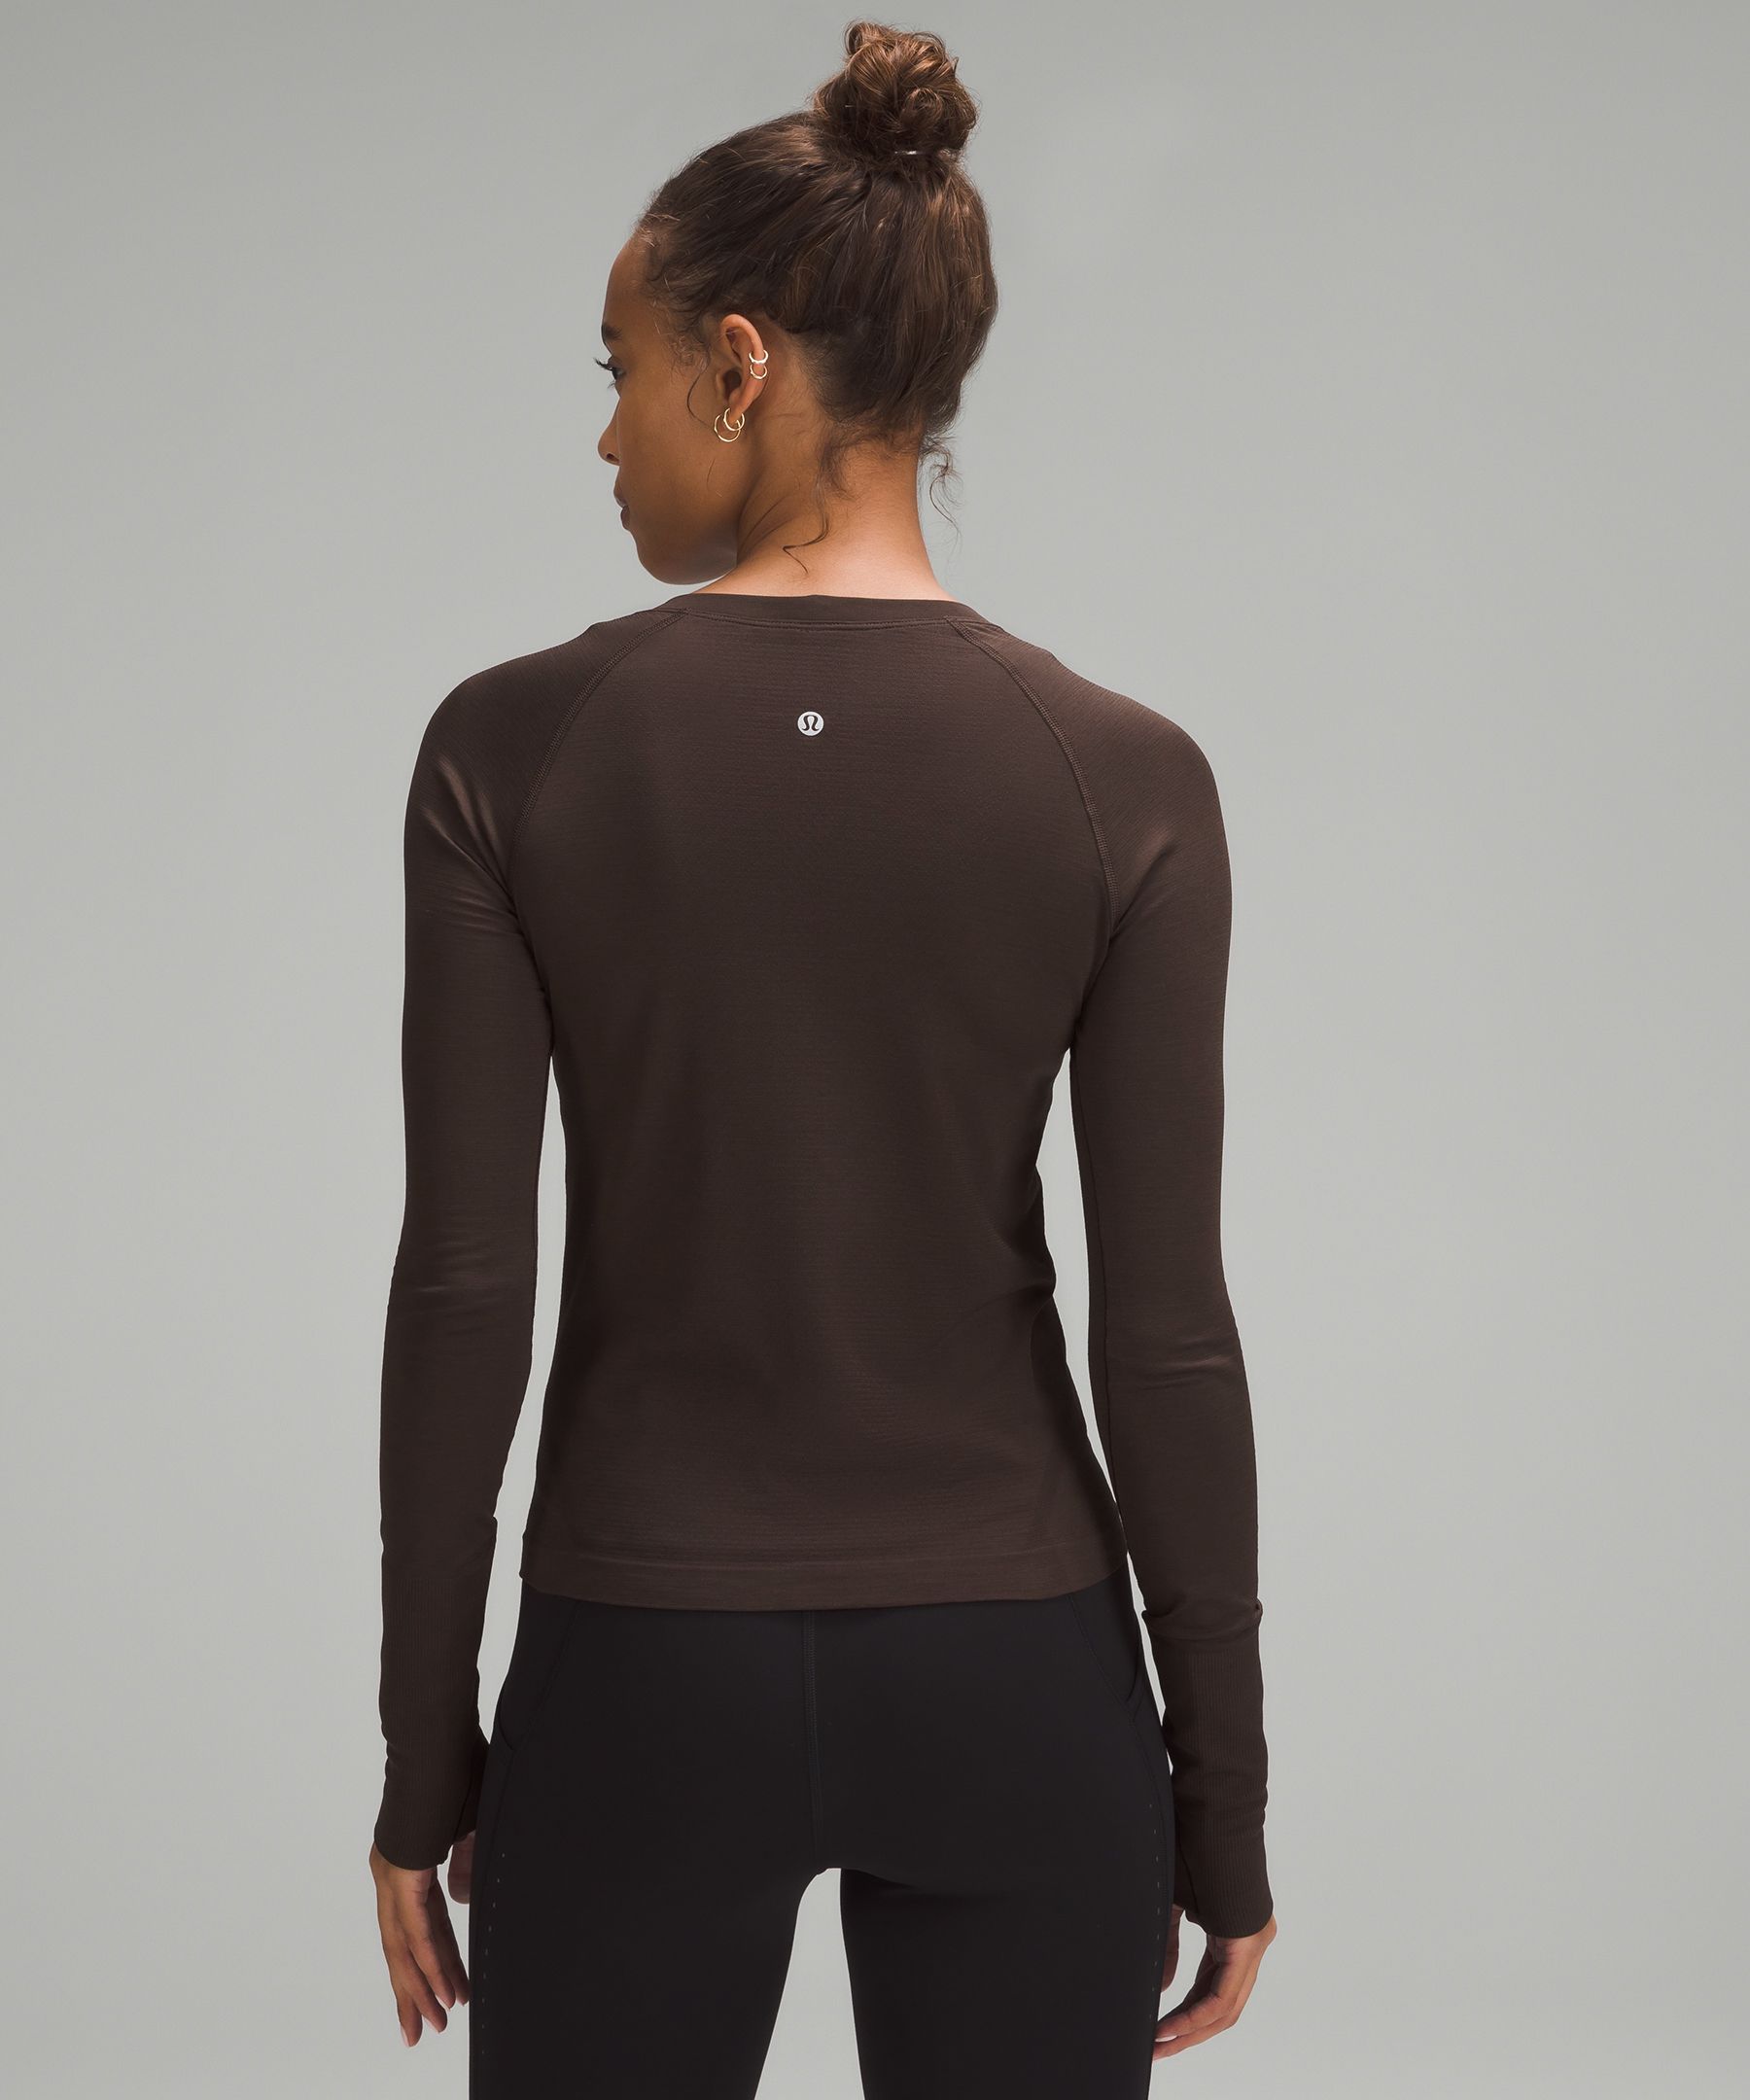 Black Swiftly 2.0 technical-mesh long-sleeved T-shirt, lululemon